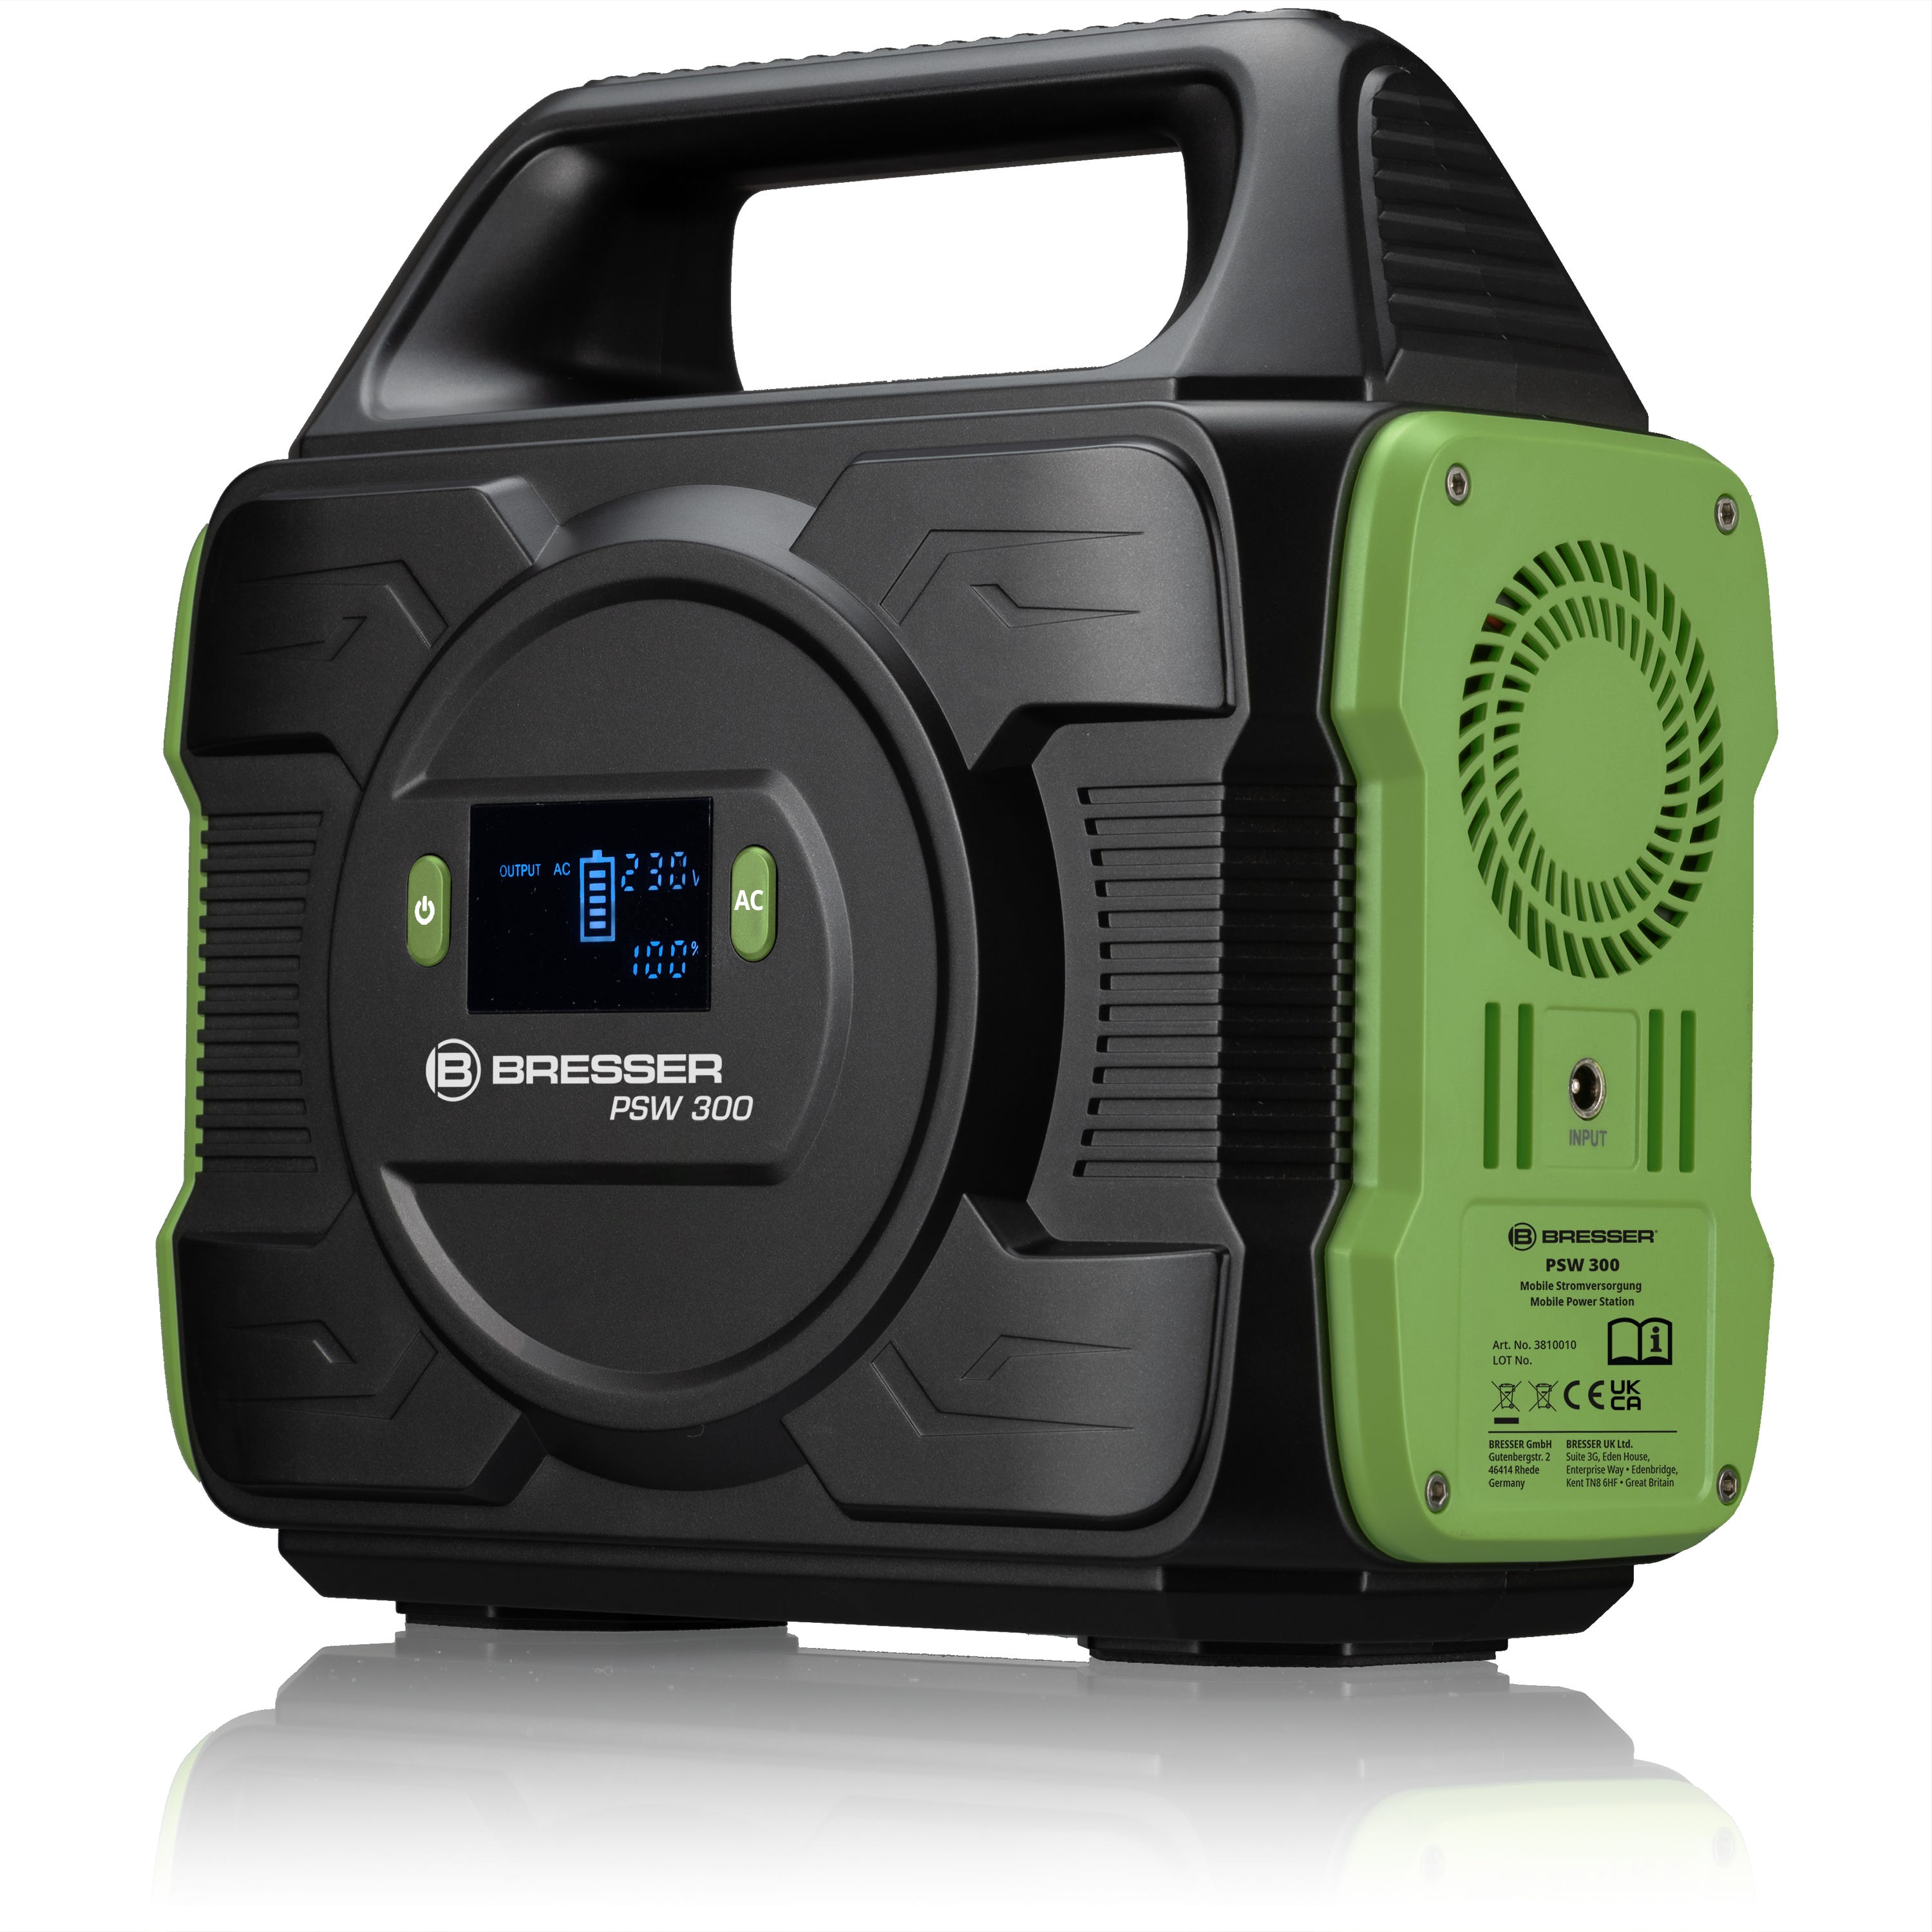 Promo Batterie externe portable bresser 1200 w - powerbank